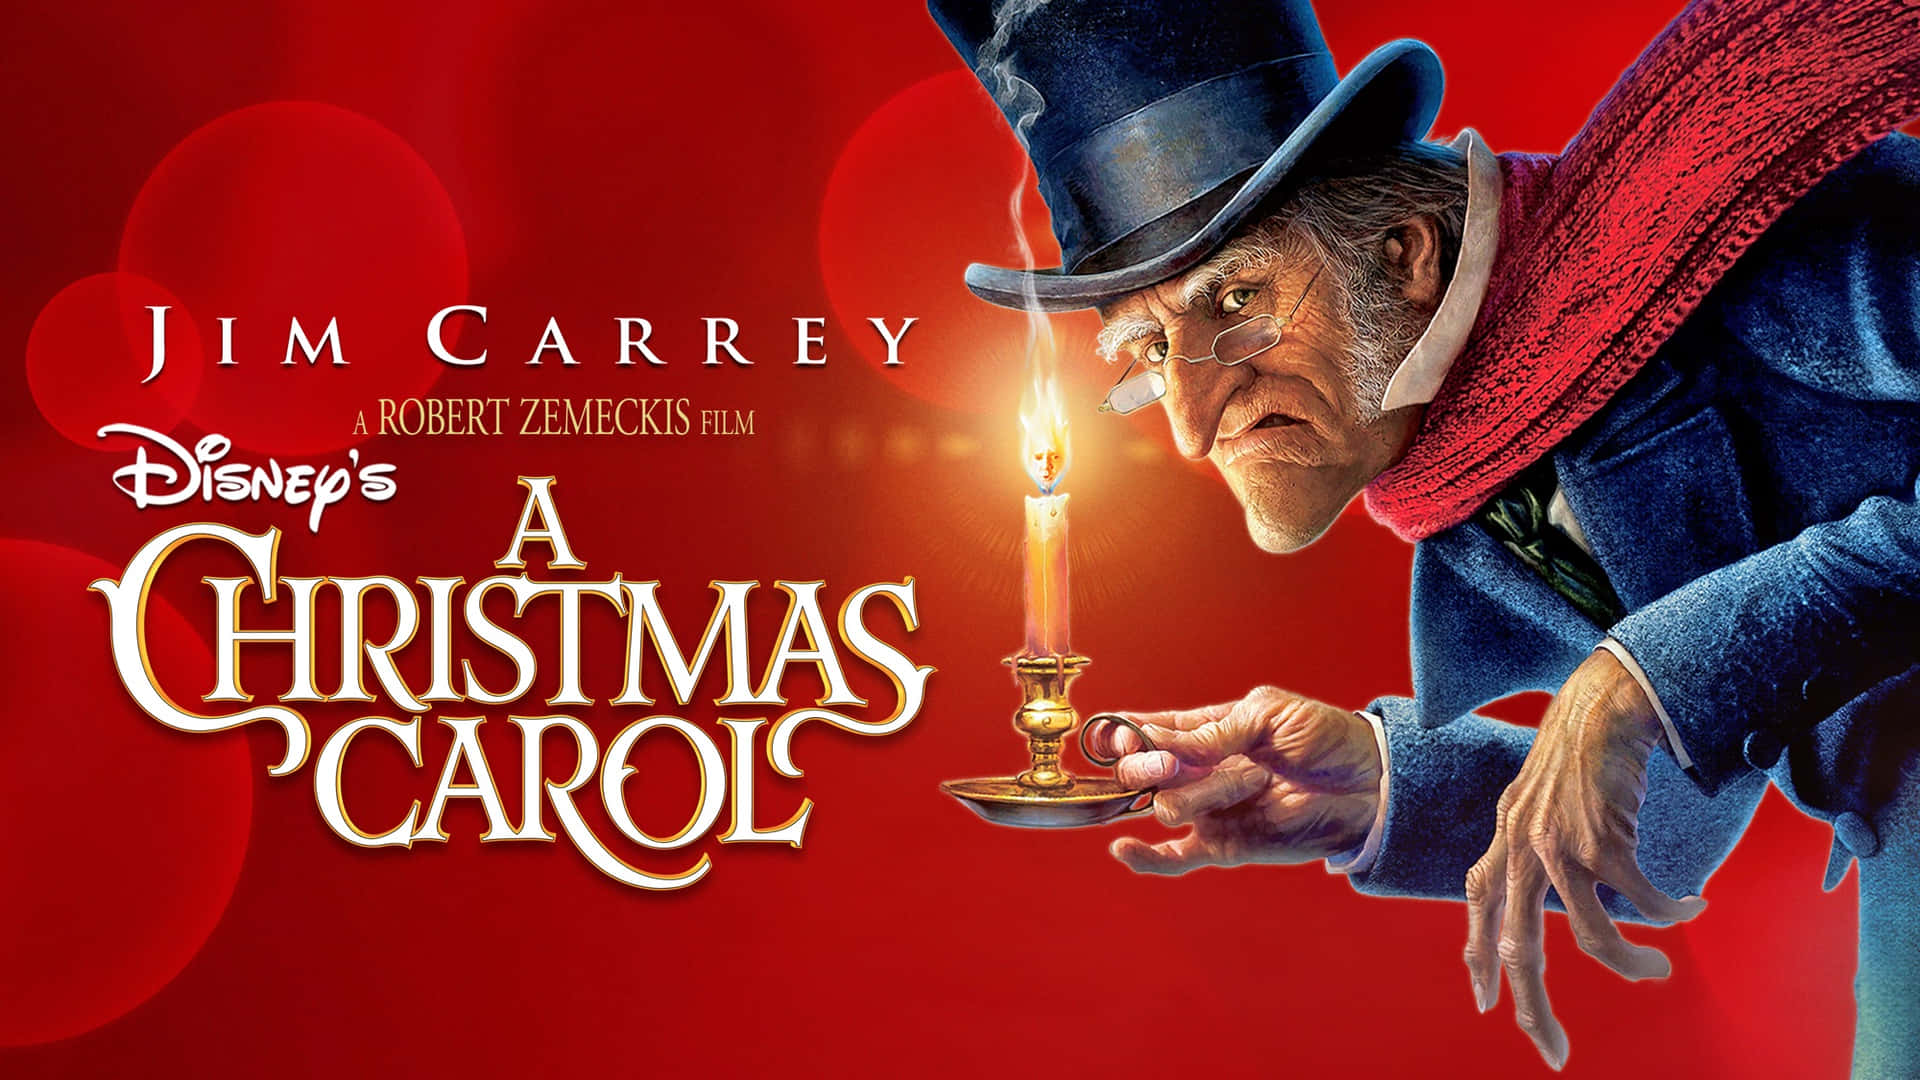 Jim Carrey's Christmas Carol